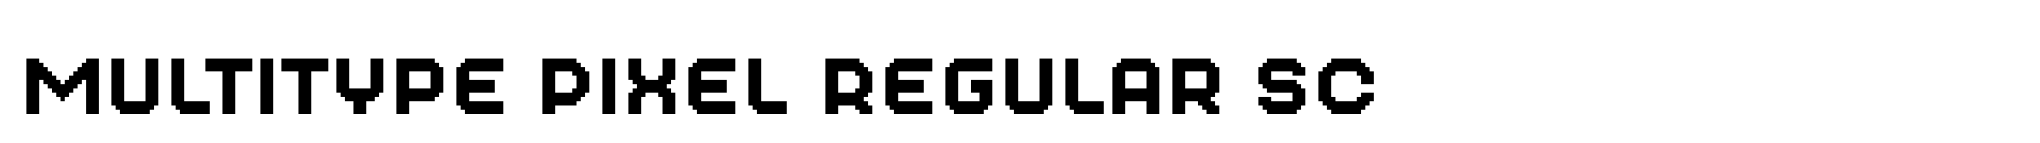 MultiType Pixel Regular SC image